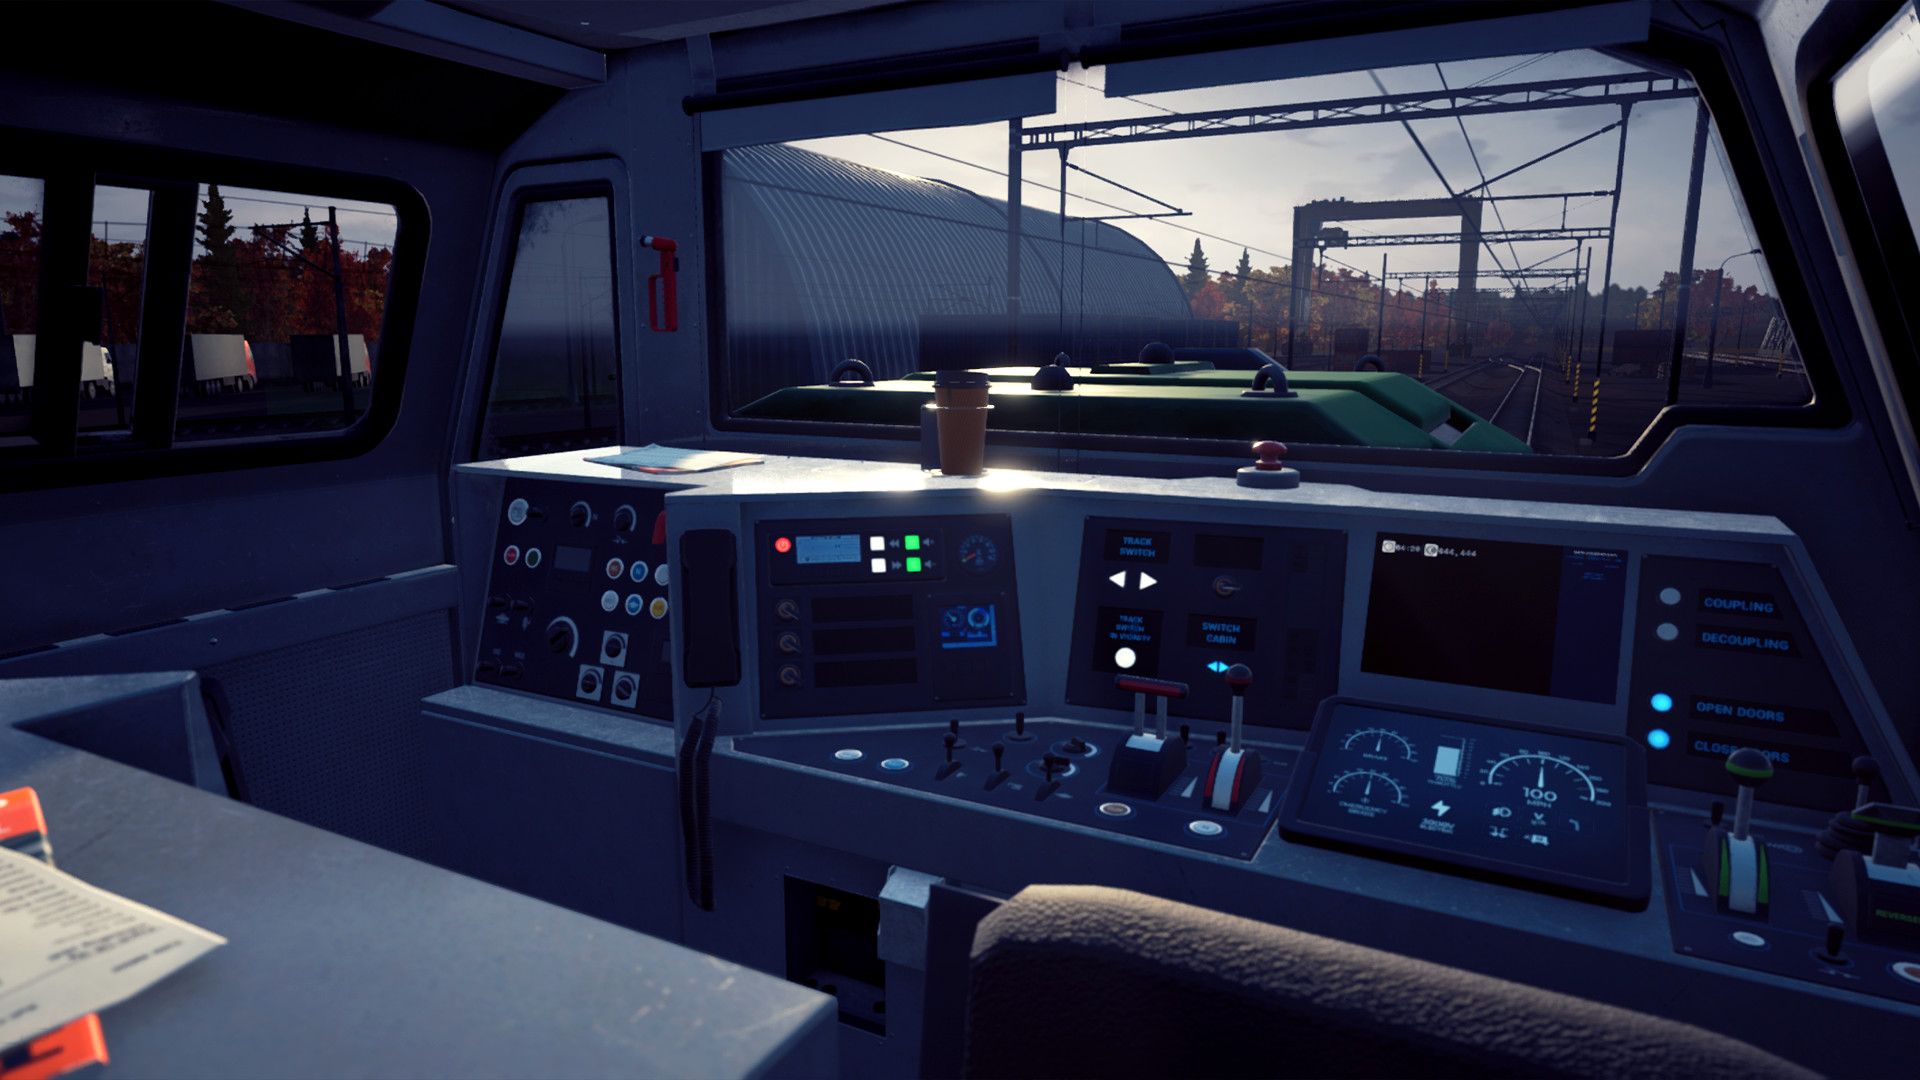 Train Life: A Railway Simulator Steam Account, $4.52